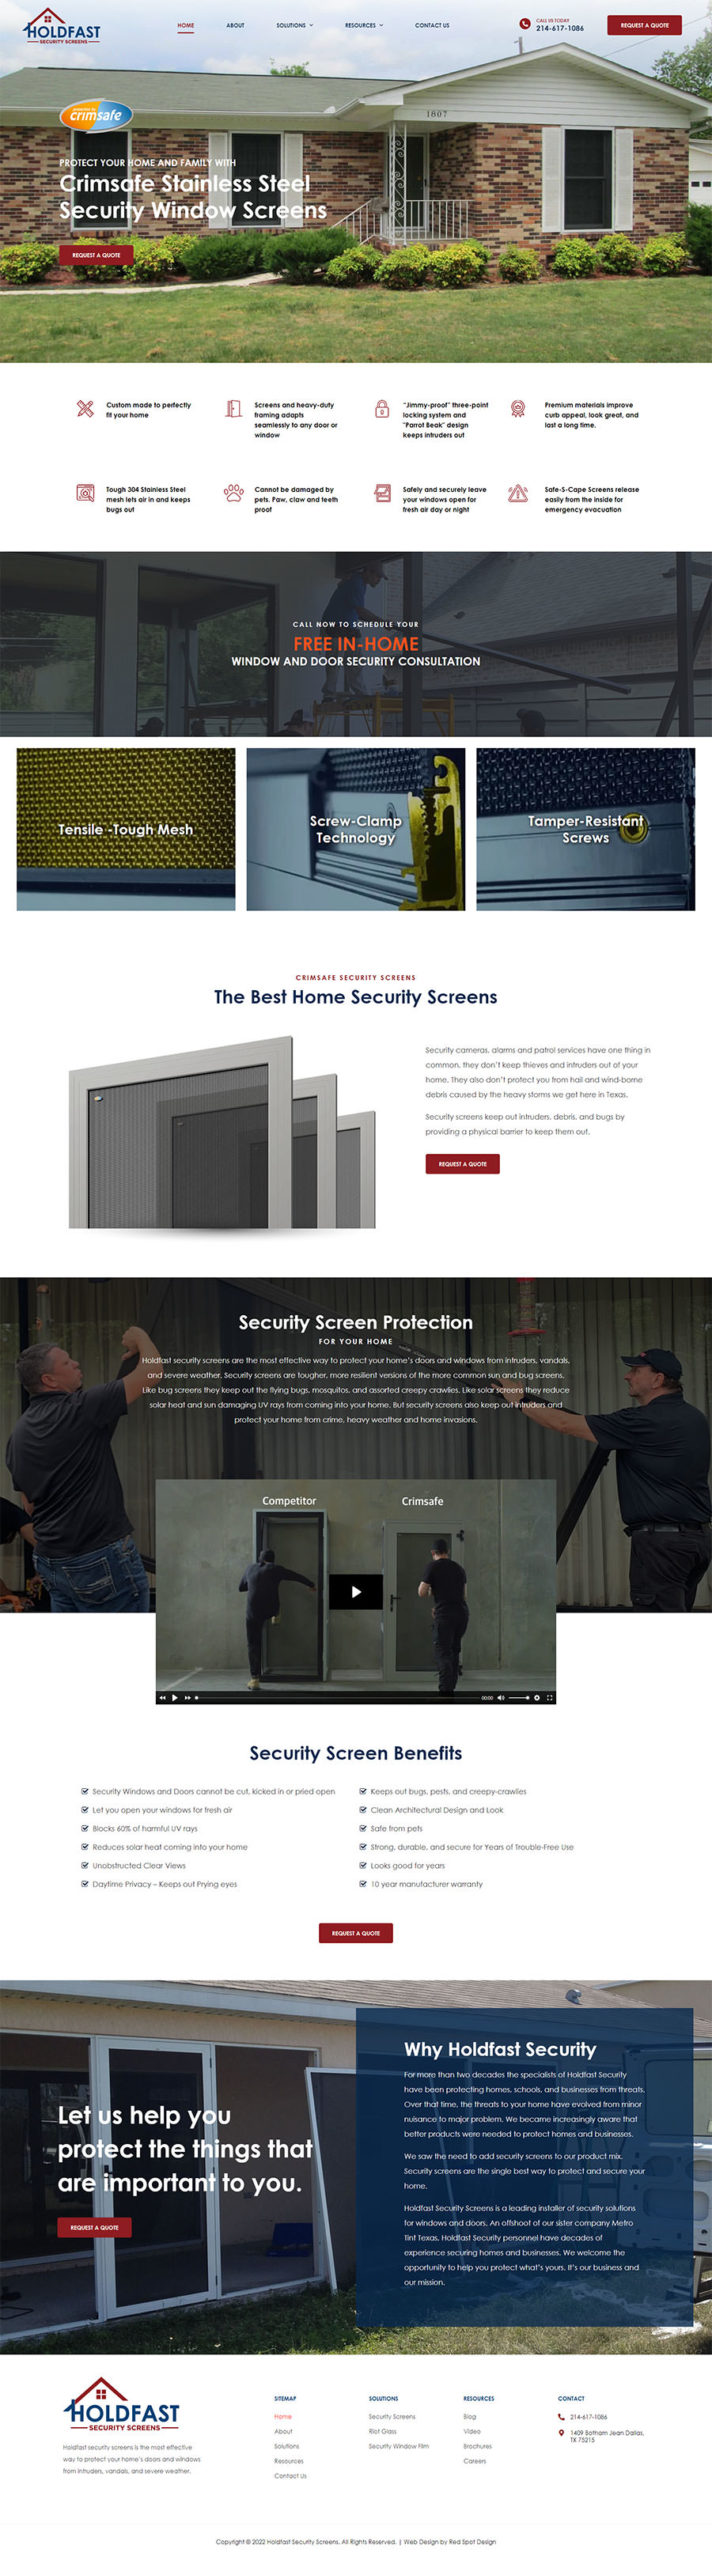 Holdfast security screens website design 1409 Botham Jean Dallas, TX 75215